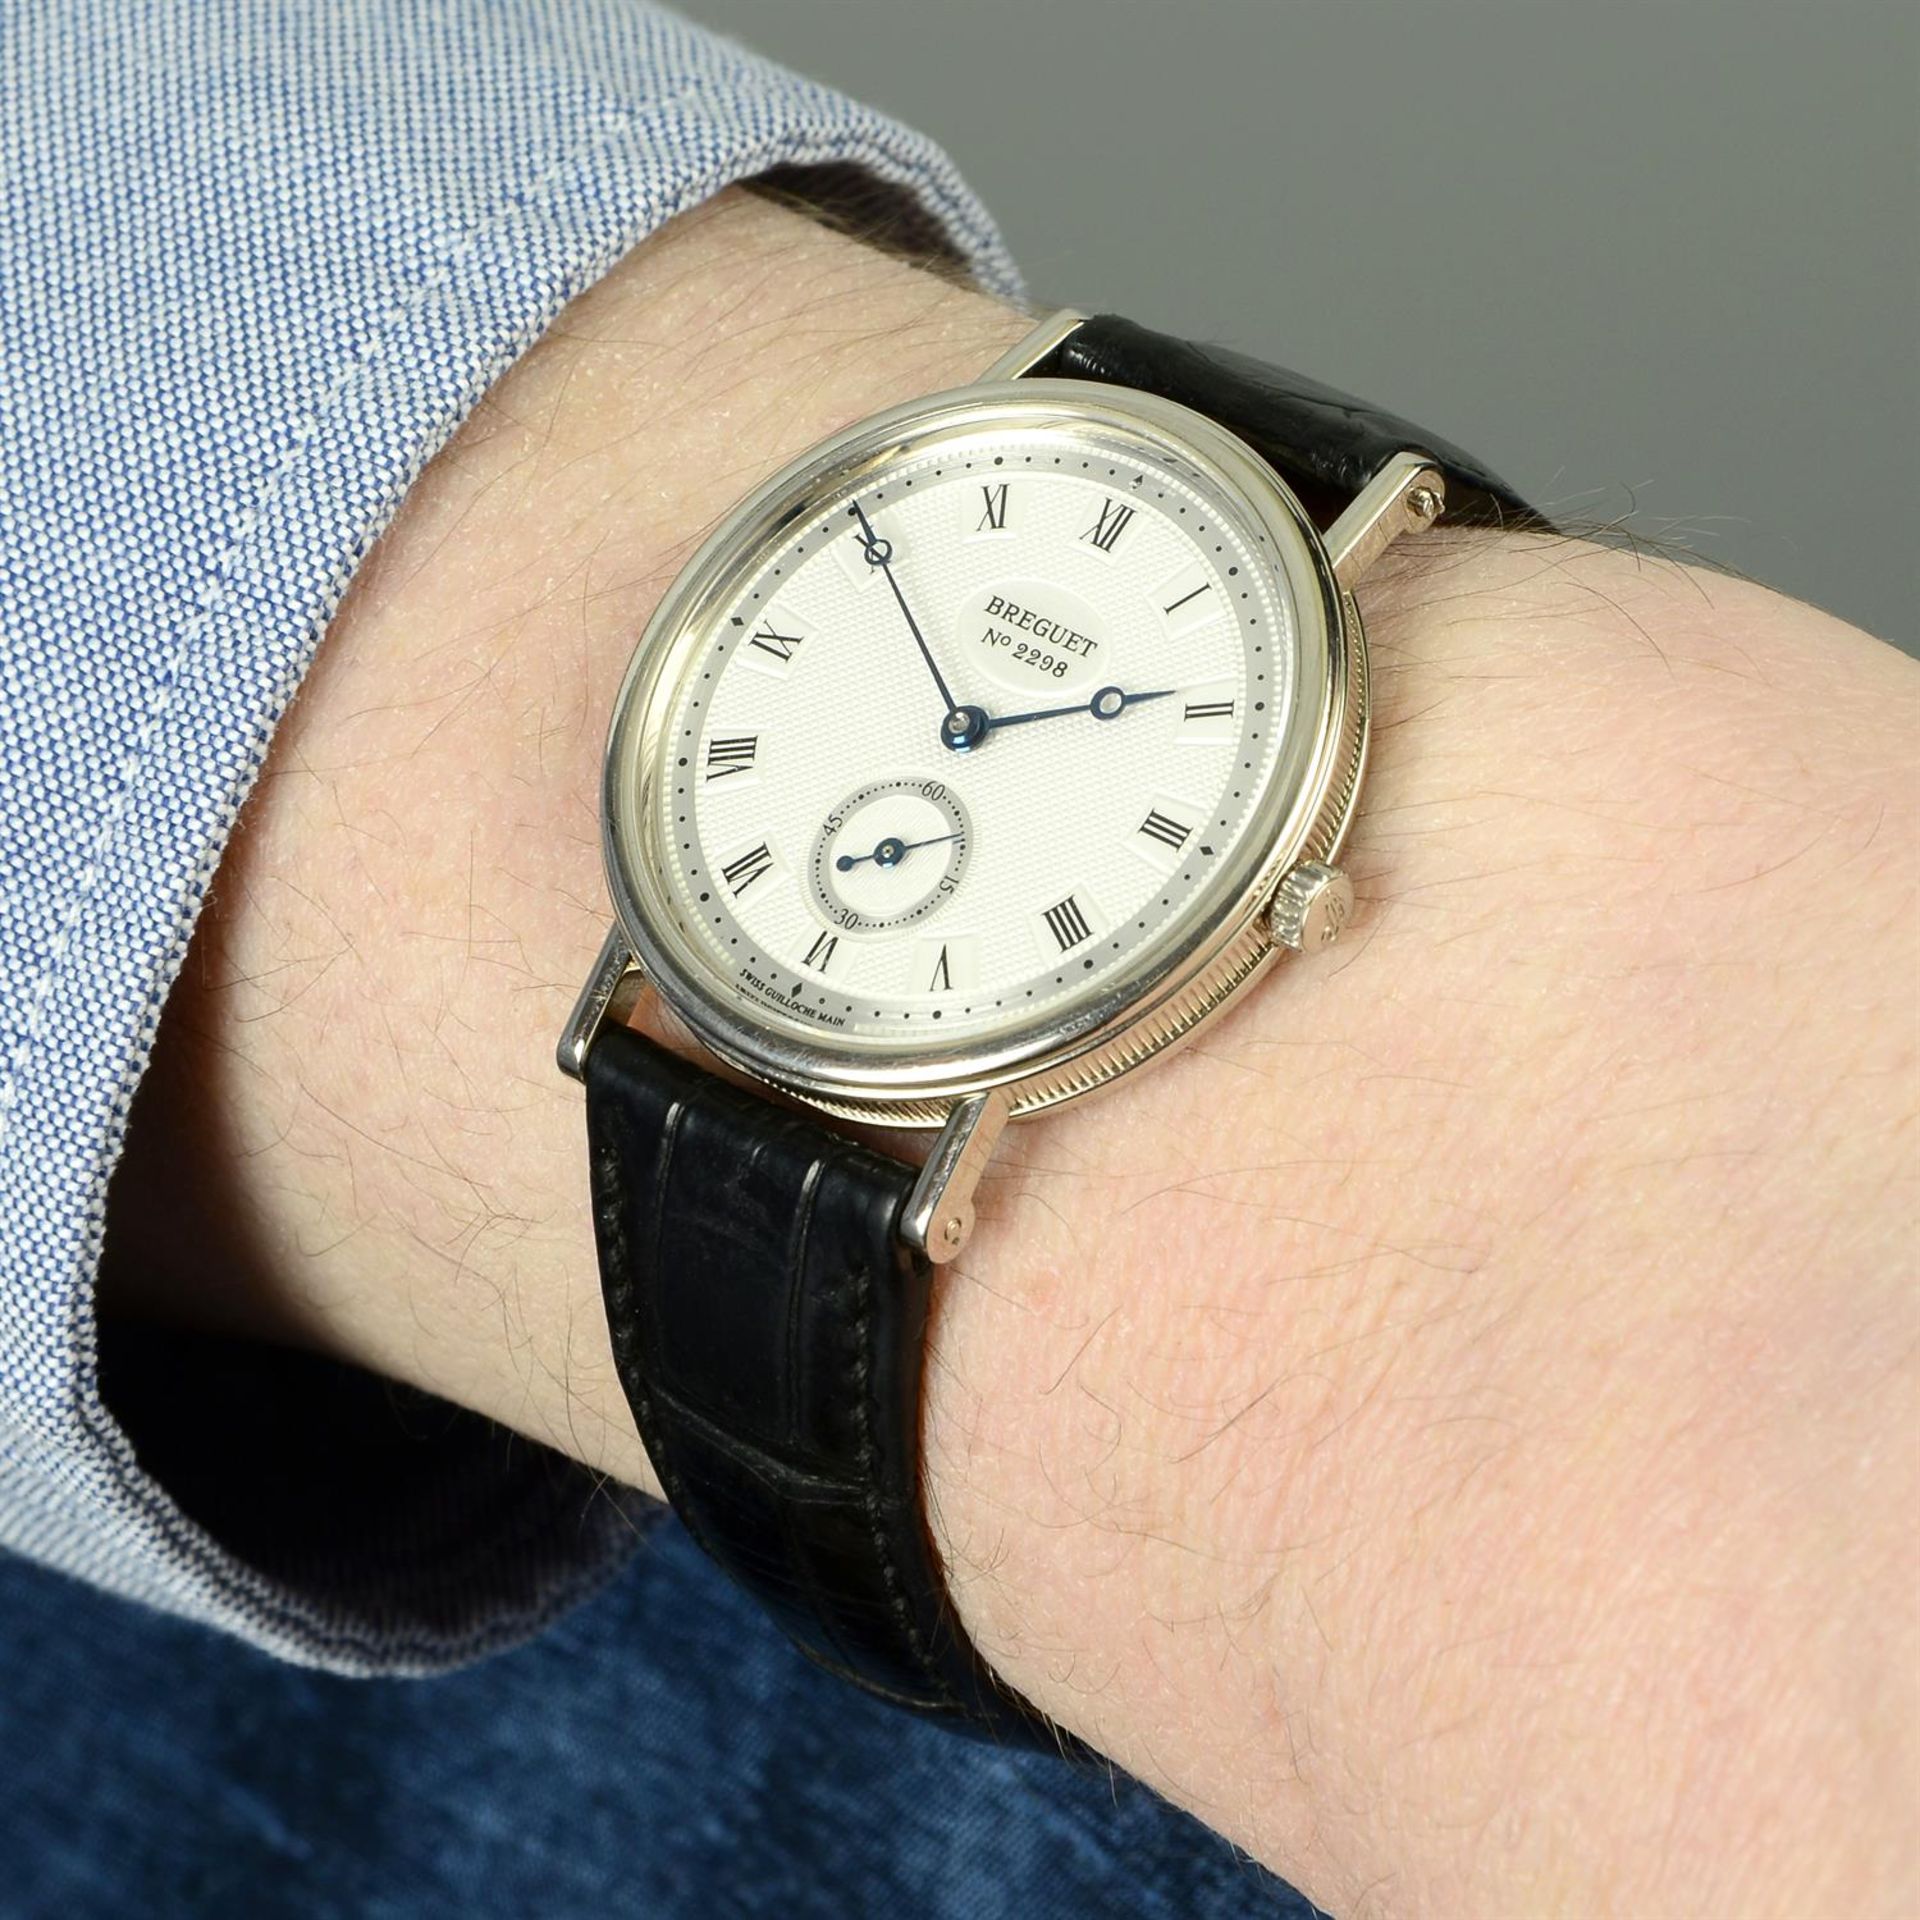 BREGUET - an 18ct white gold Classique 3910 wrist watch, 34mm. - Image 5 of 5